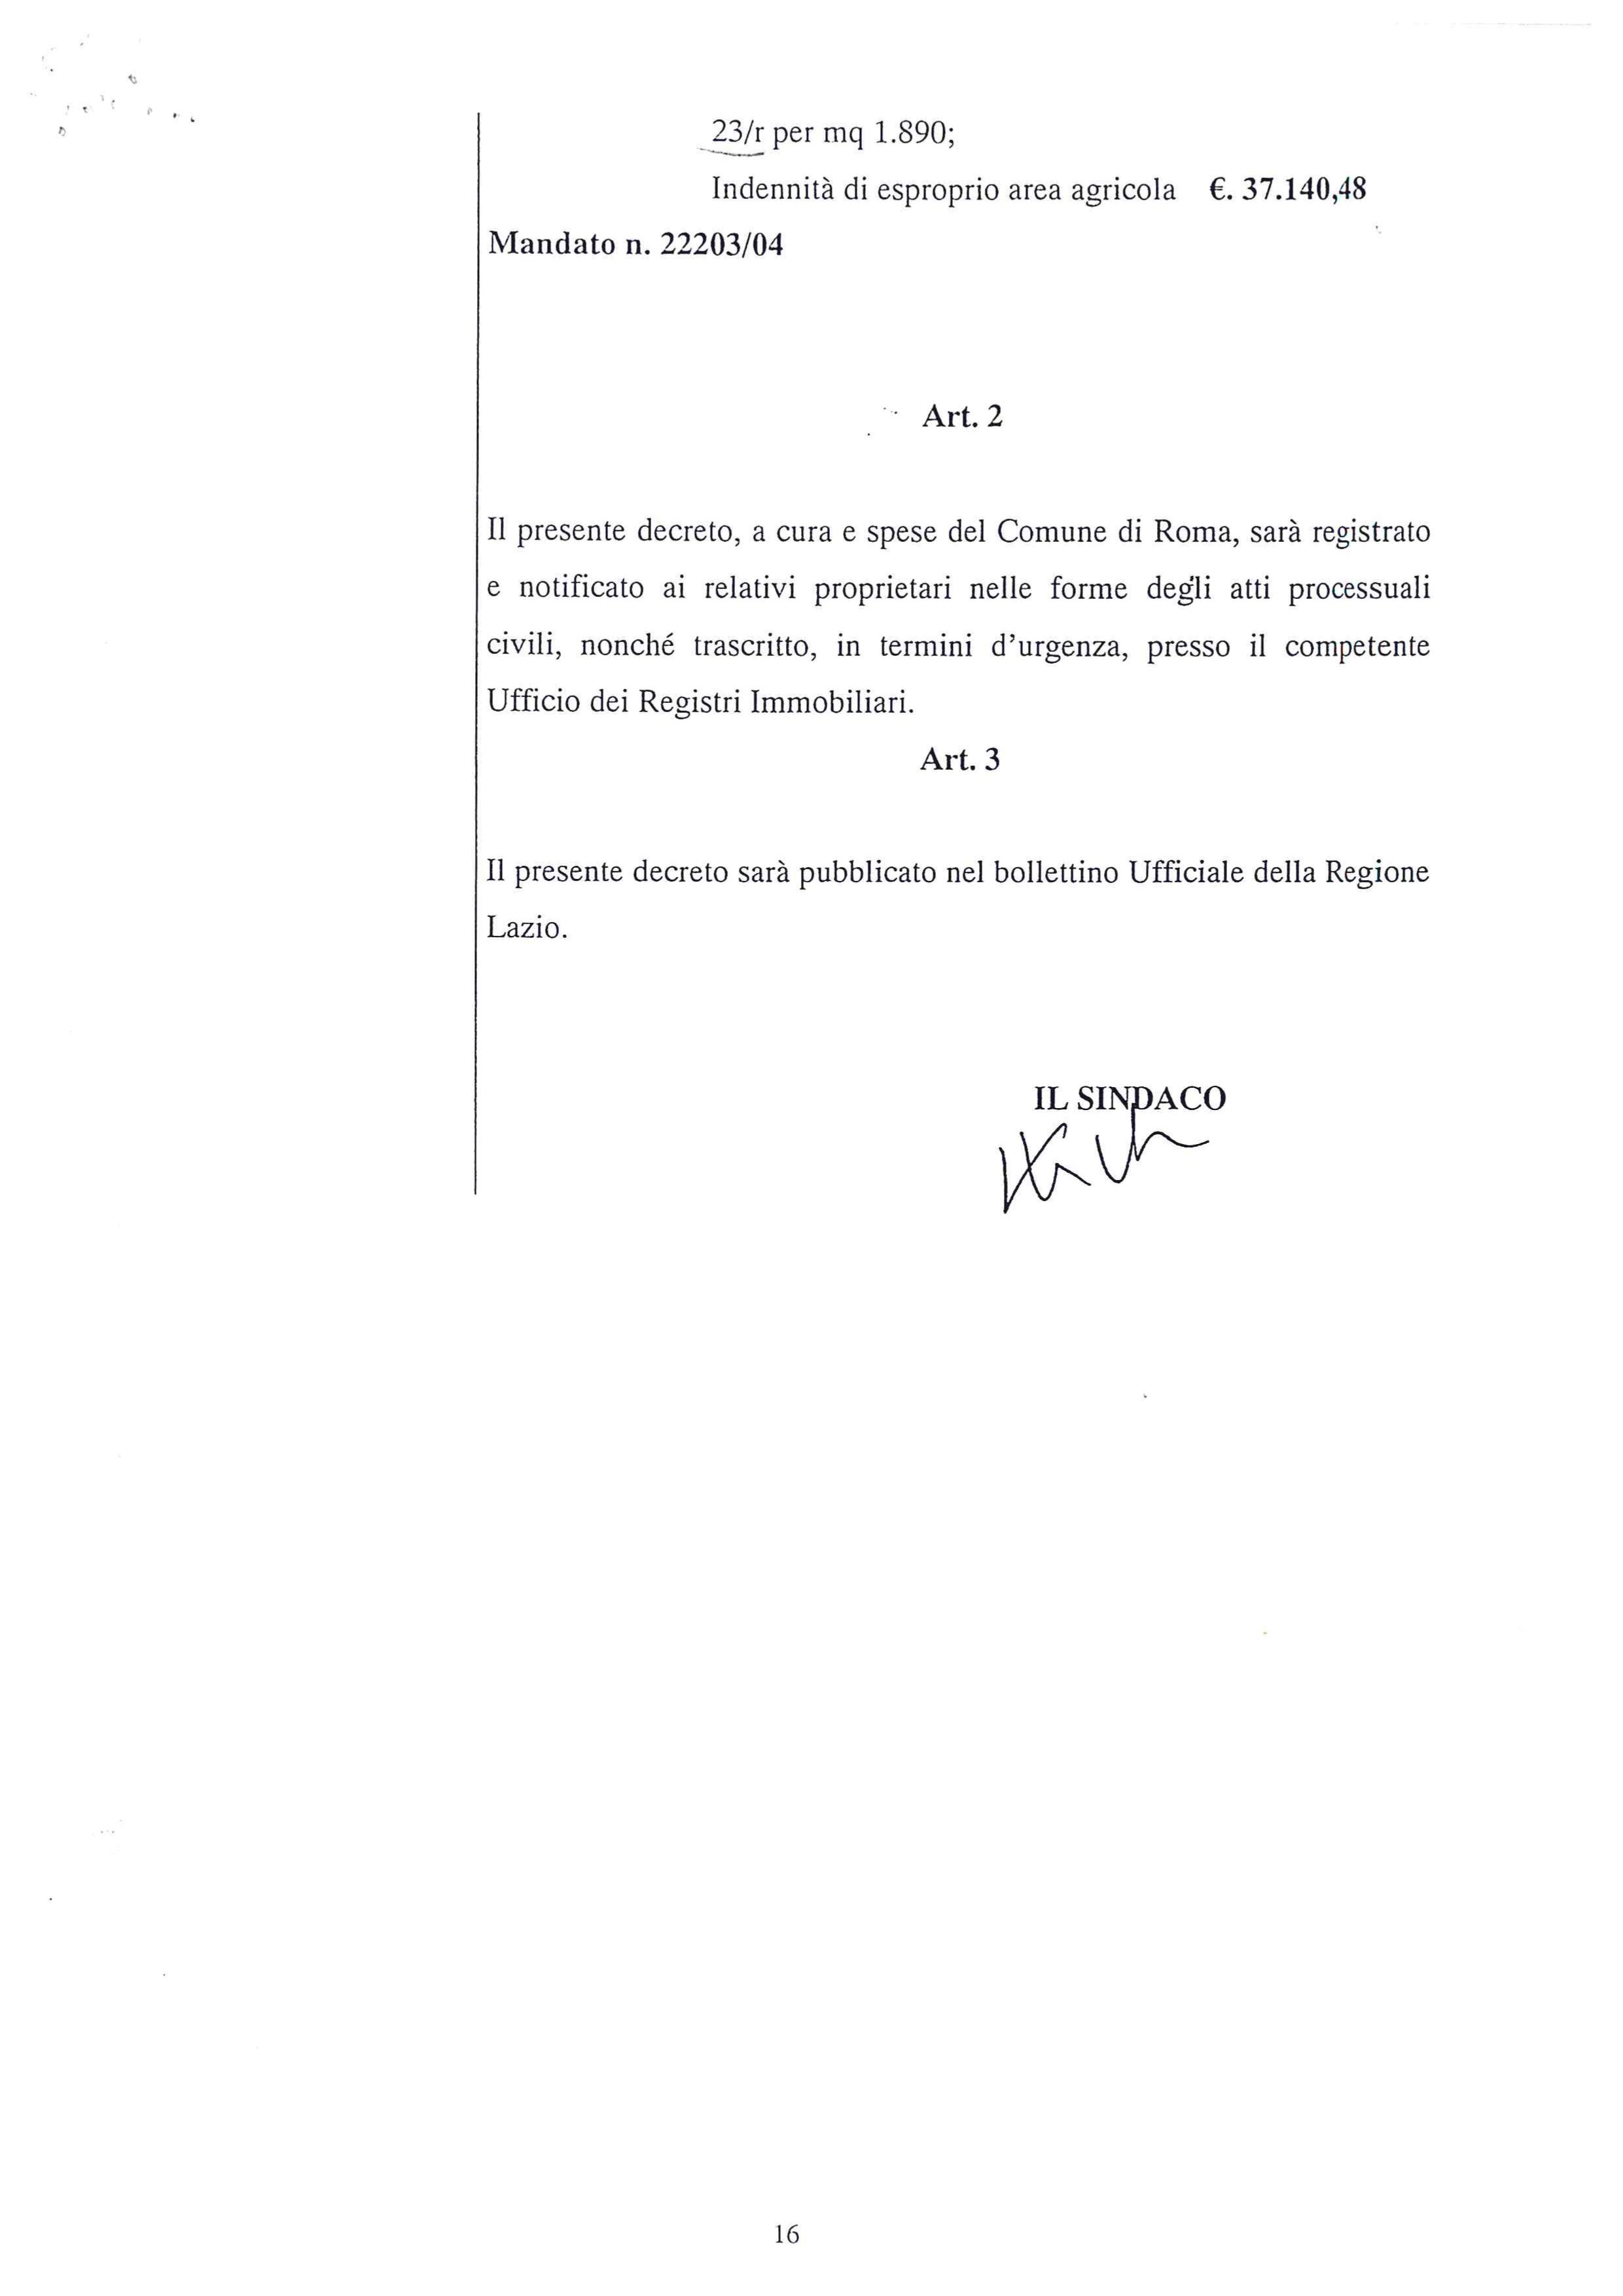 2005 Decreto esproprio Veltroni 7